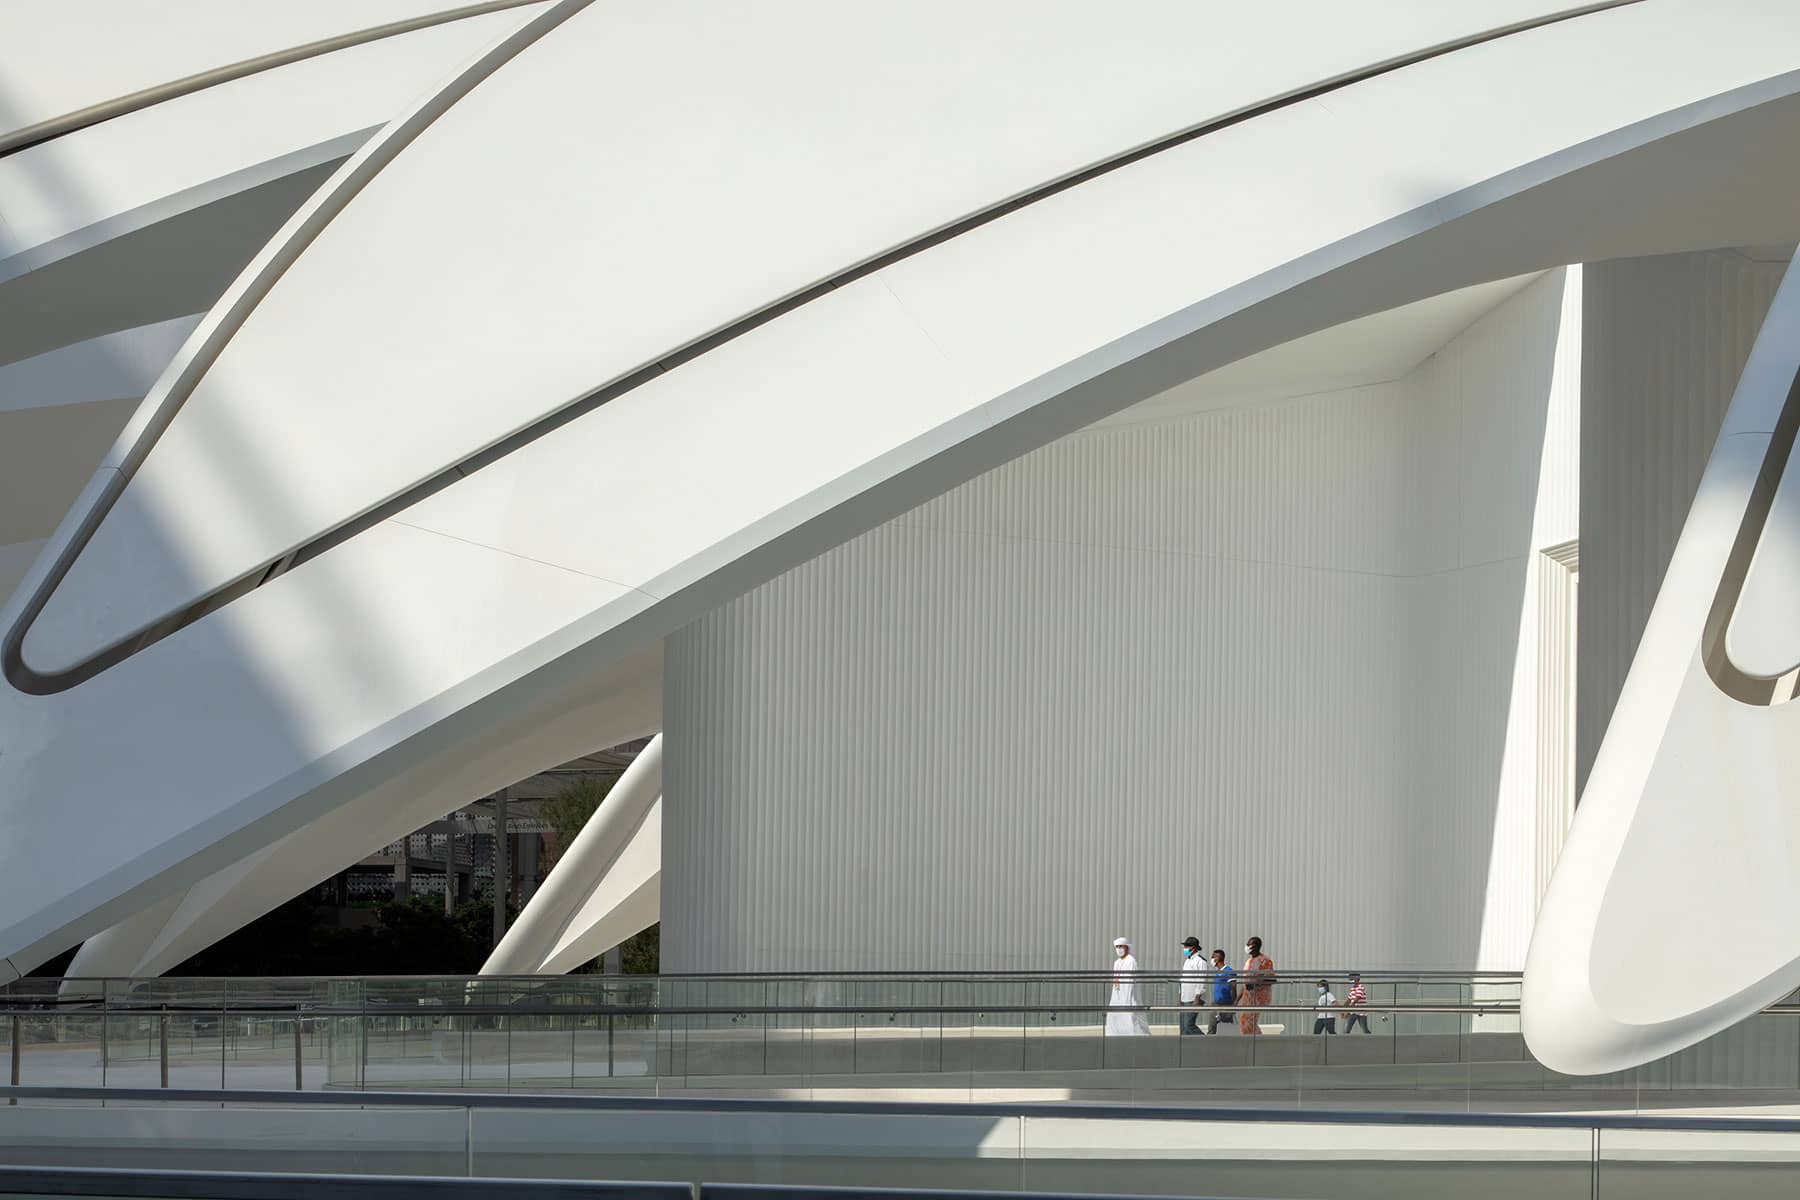 Architecture Photography Dubai: Architectural detail of canopy at the UAE Pavilion, Expo2020, Dubai: Calatrava